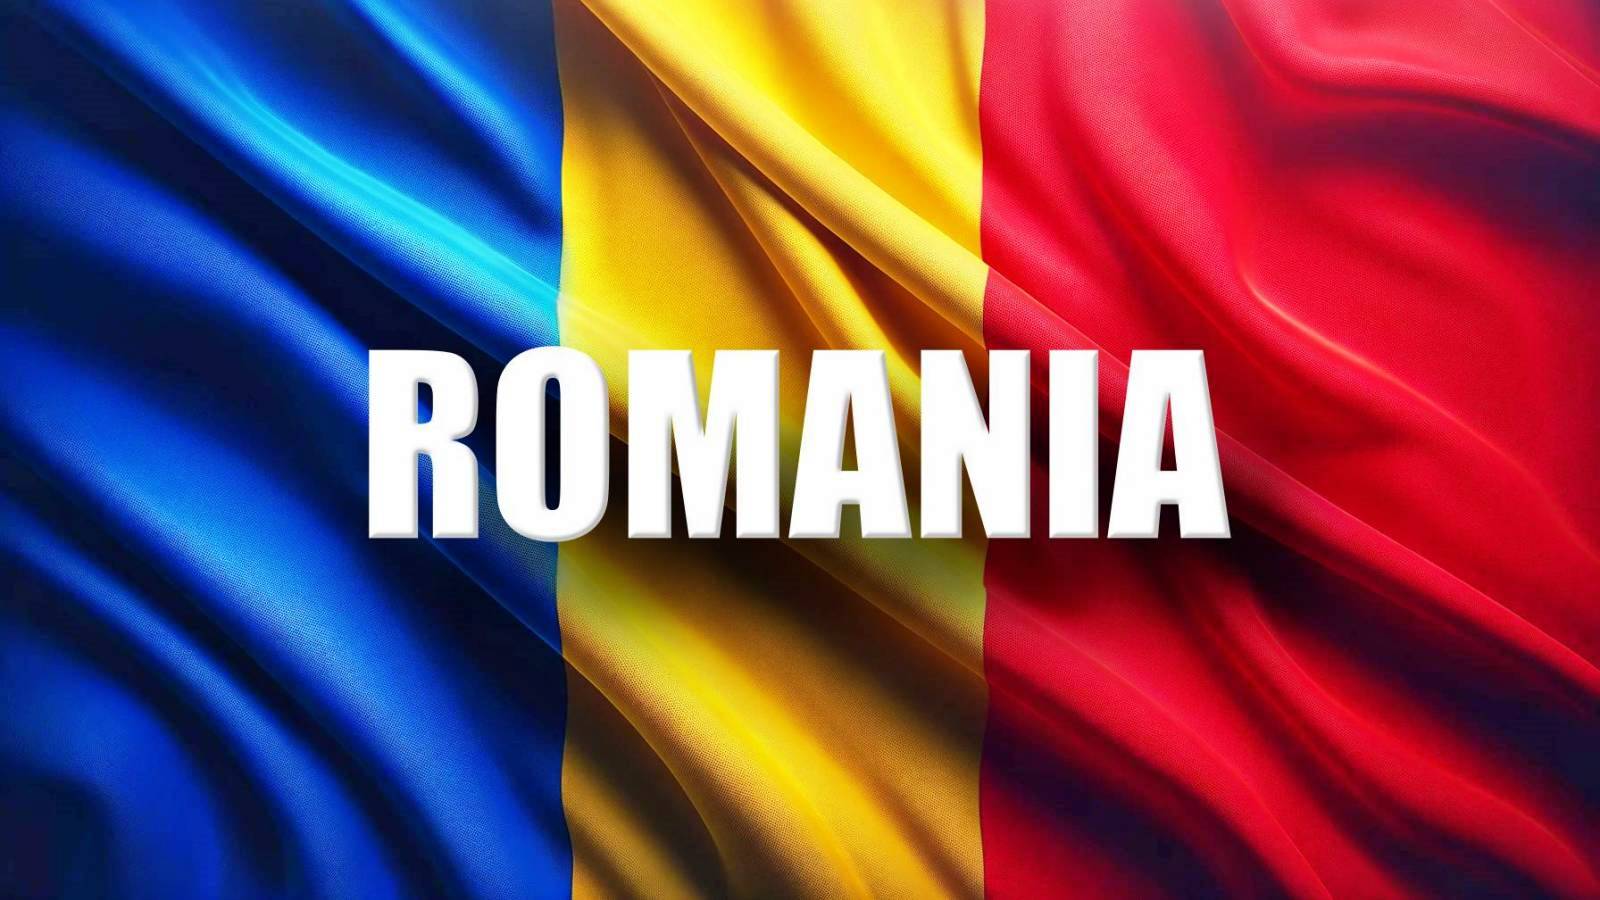 Romania Aderarea Schengen 2023 Improbabila Anuntul Oficial